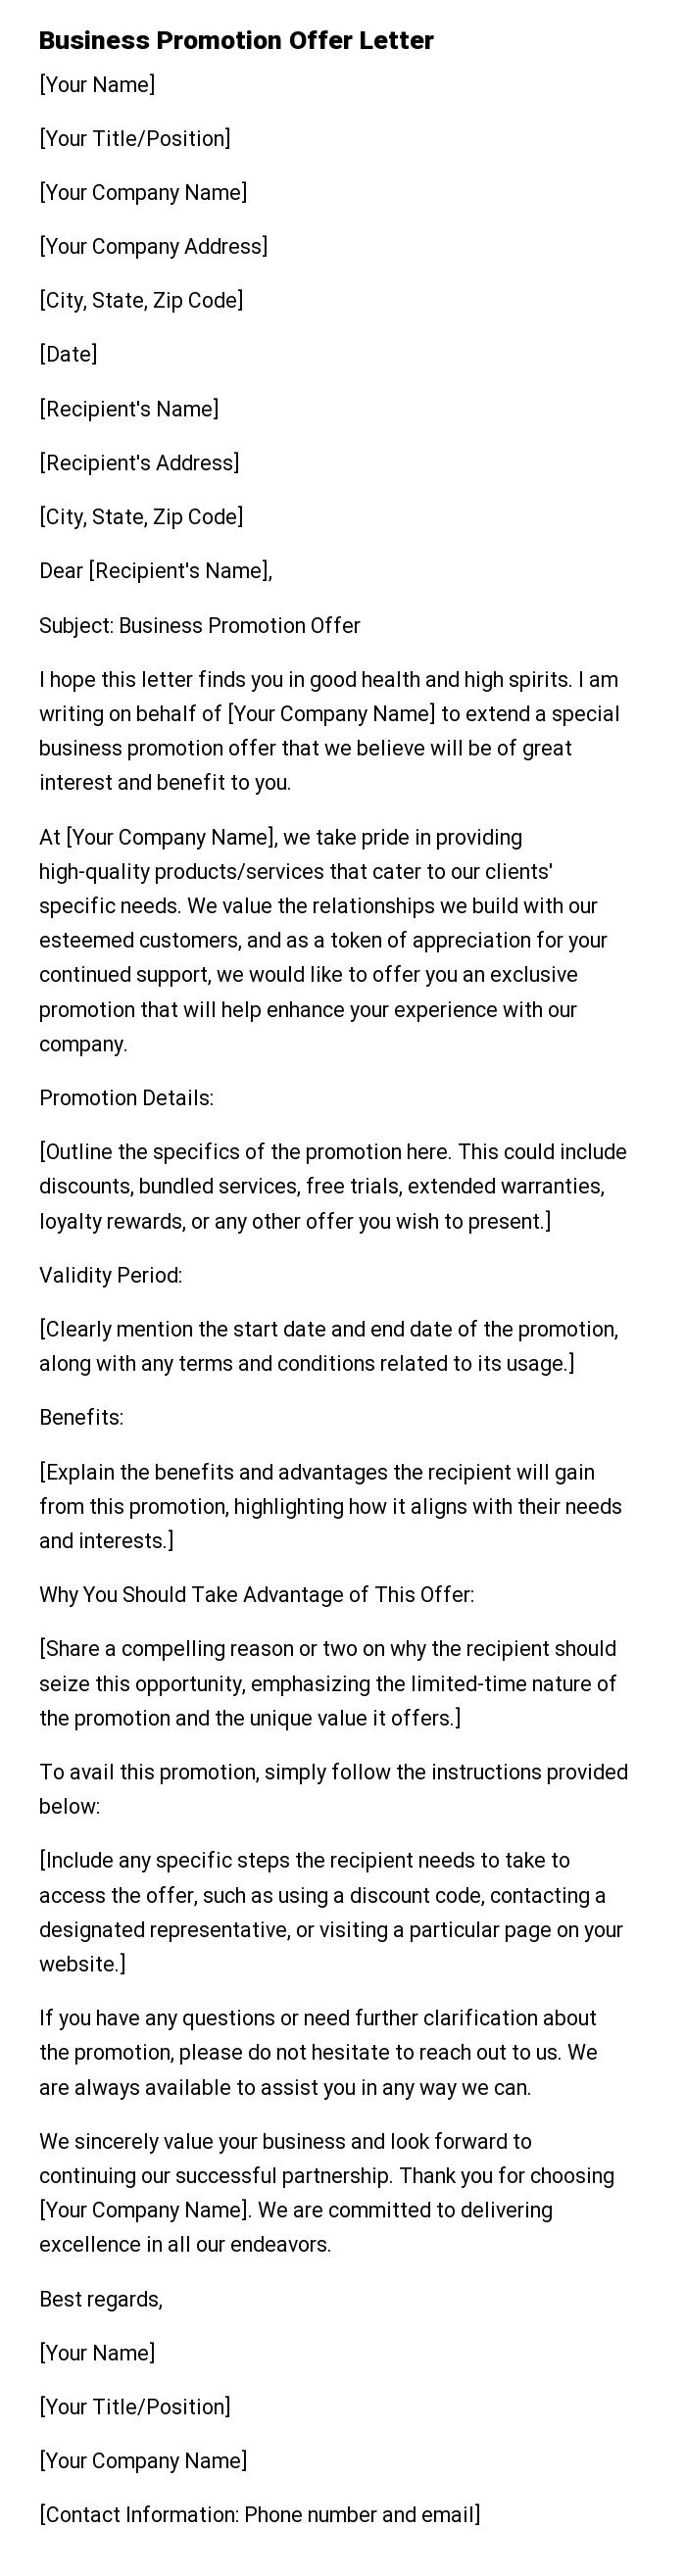 Business Promotion Offer Letter